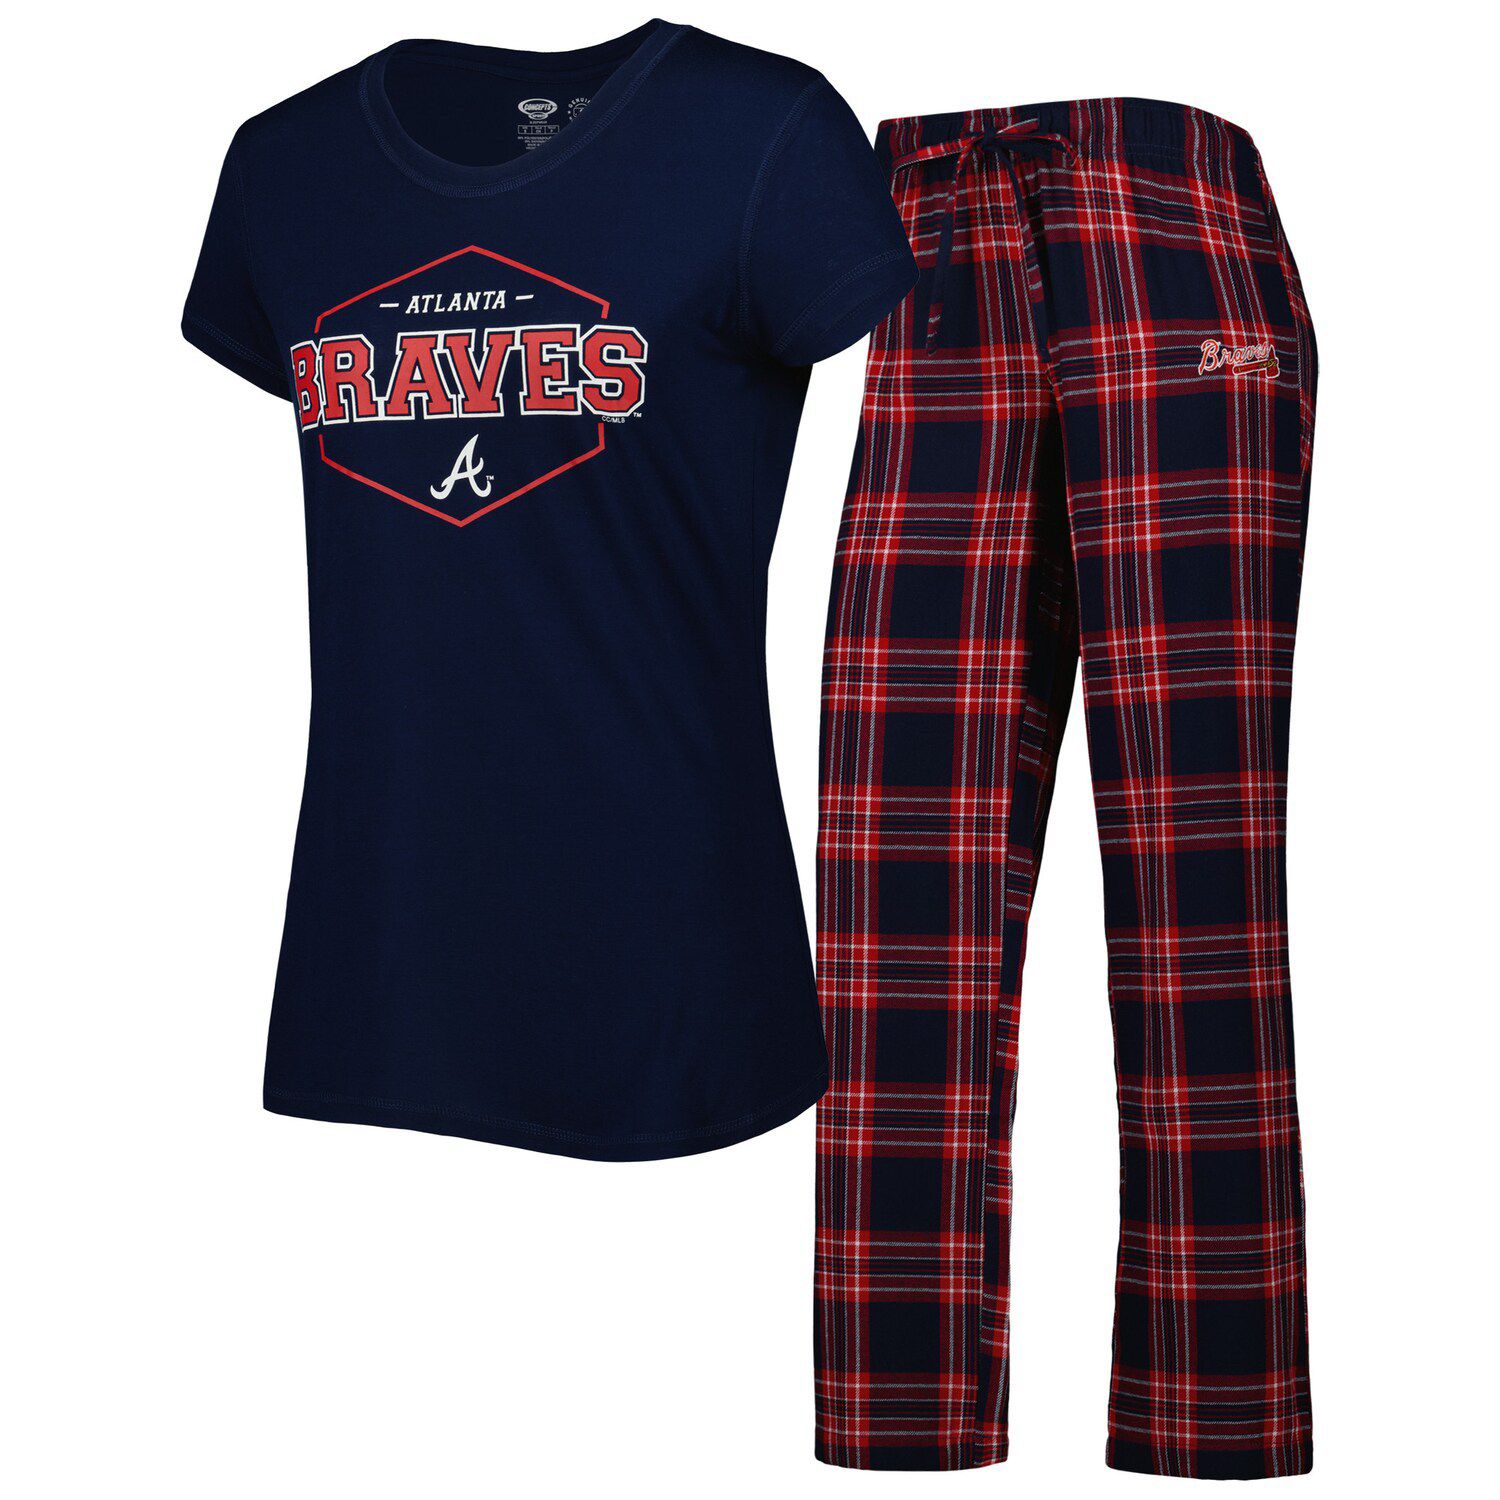 Men's Concepts Sport Navy/Gray Boston Red Sox Breakthrough Long Sleeve Top & Pants Sleep Set Size: 3XL